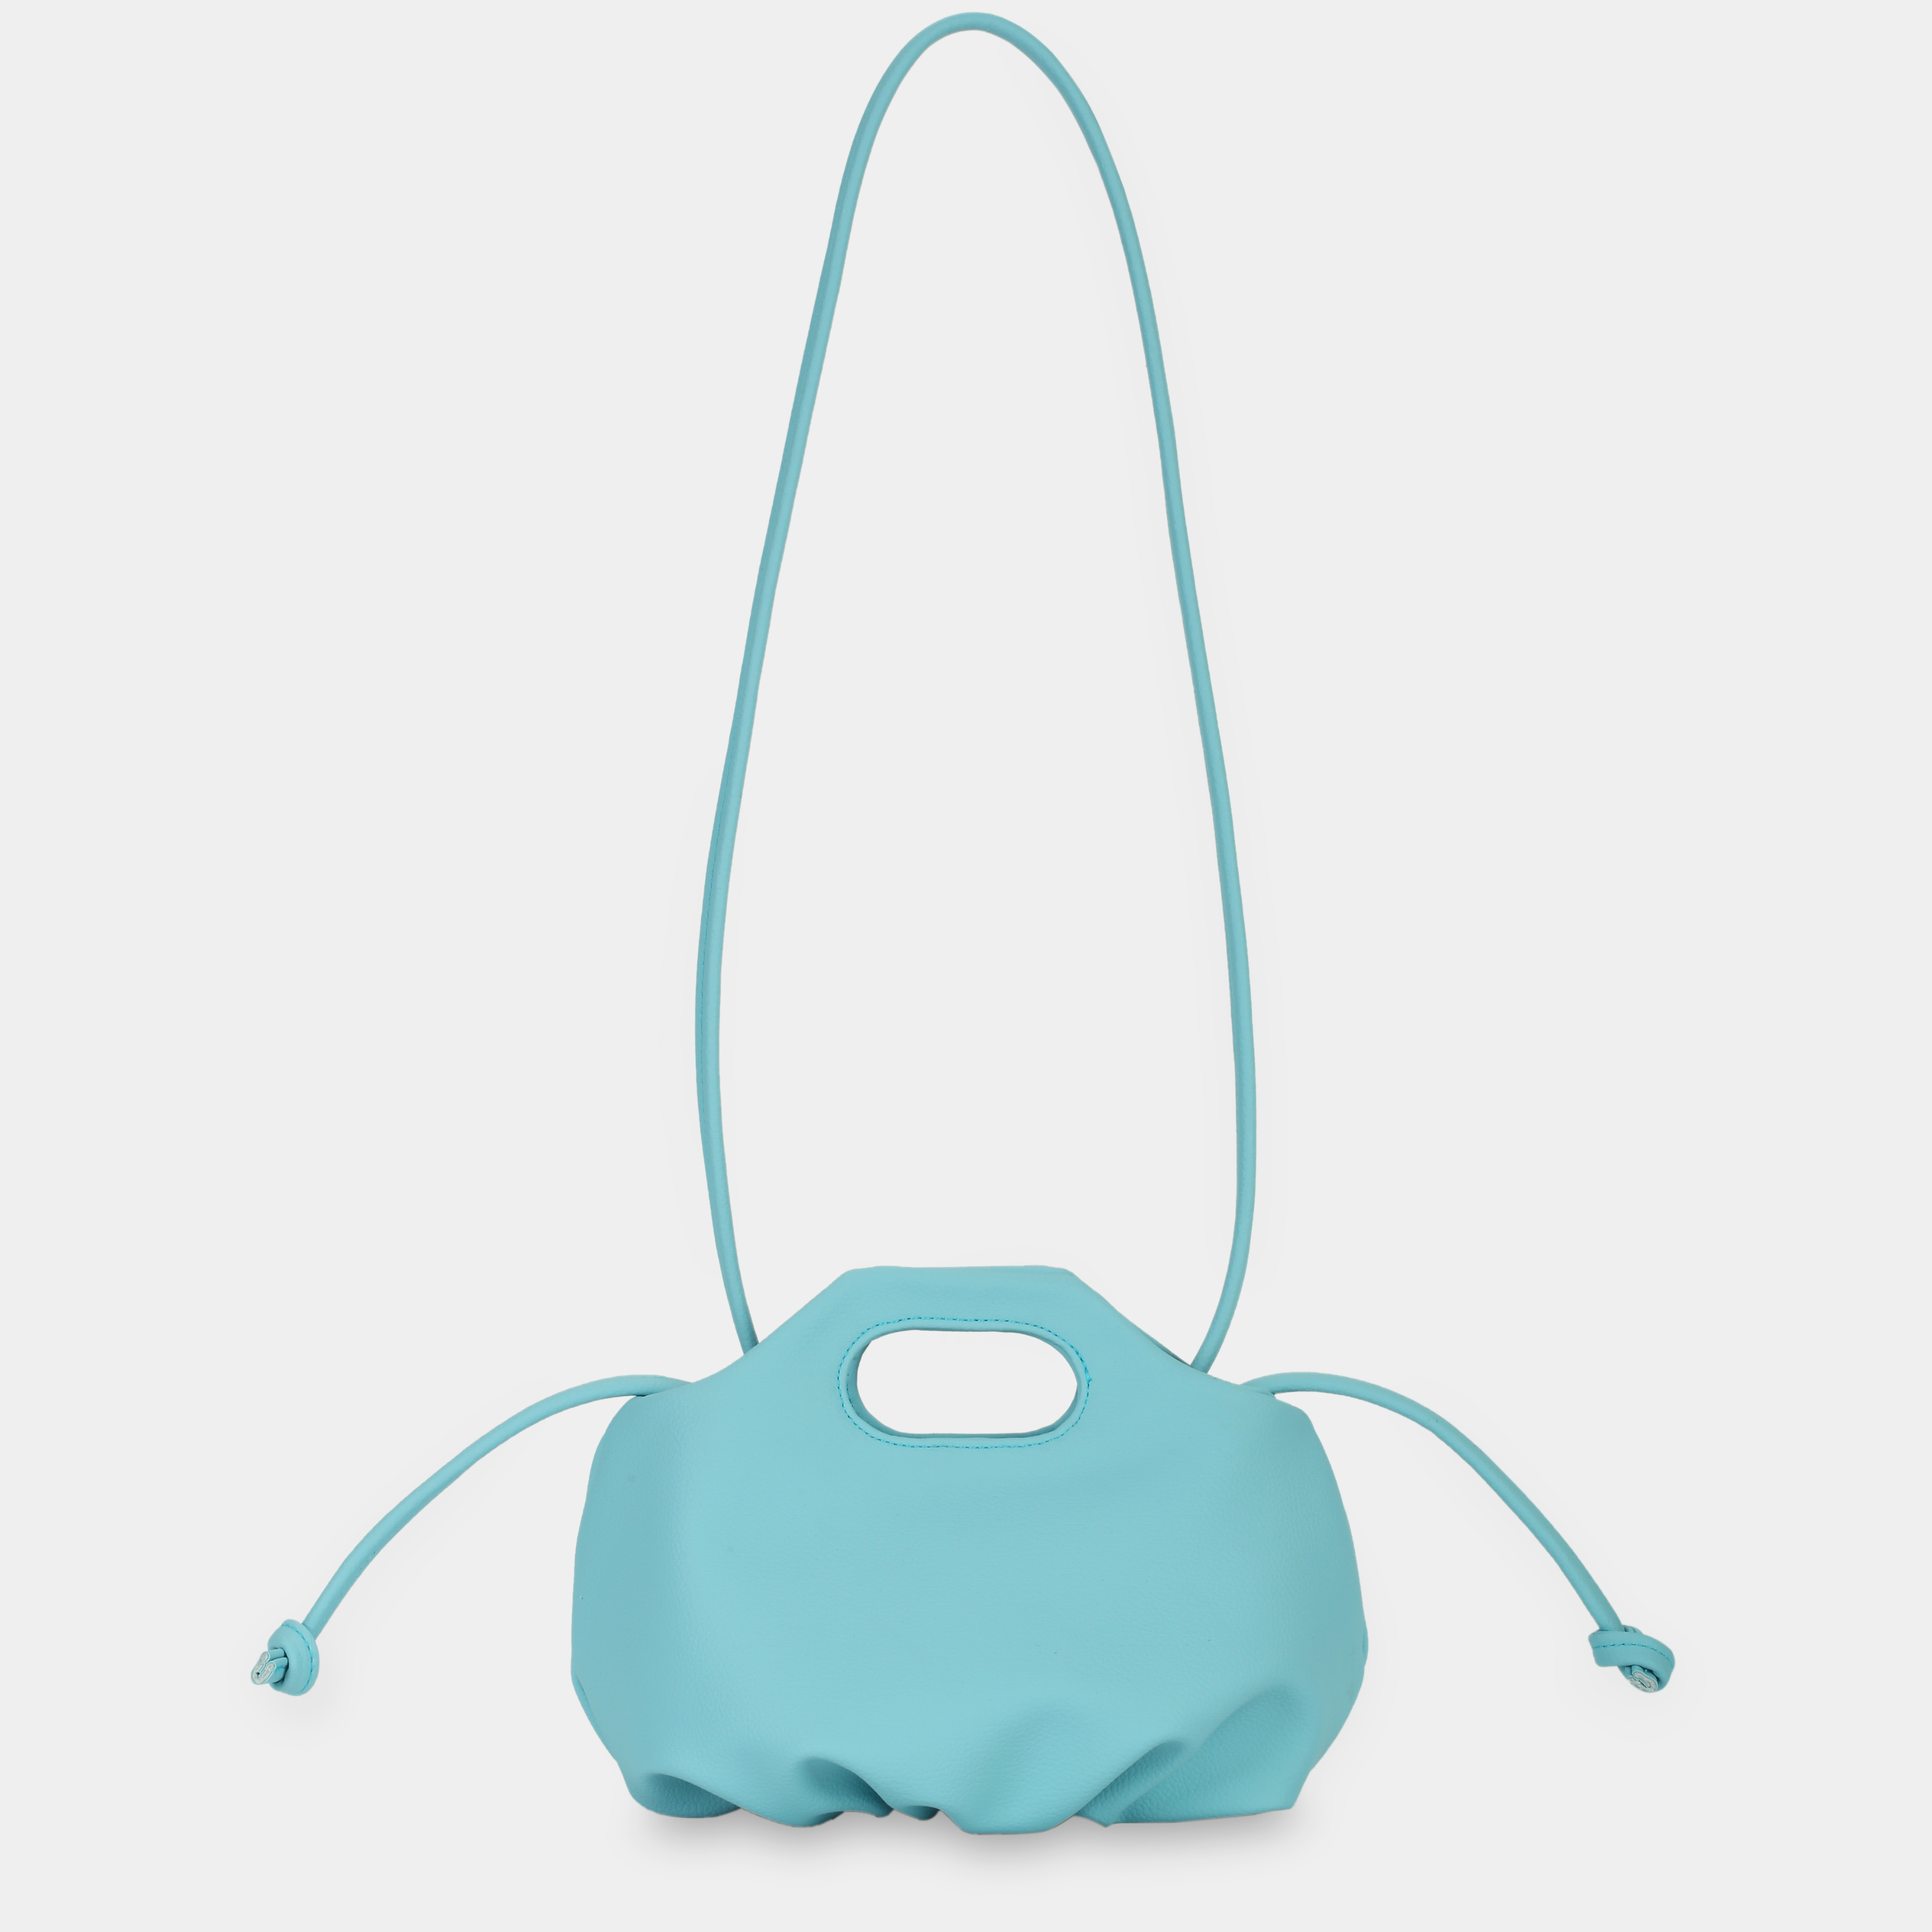 Flower Mini handbag in blue pastel